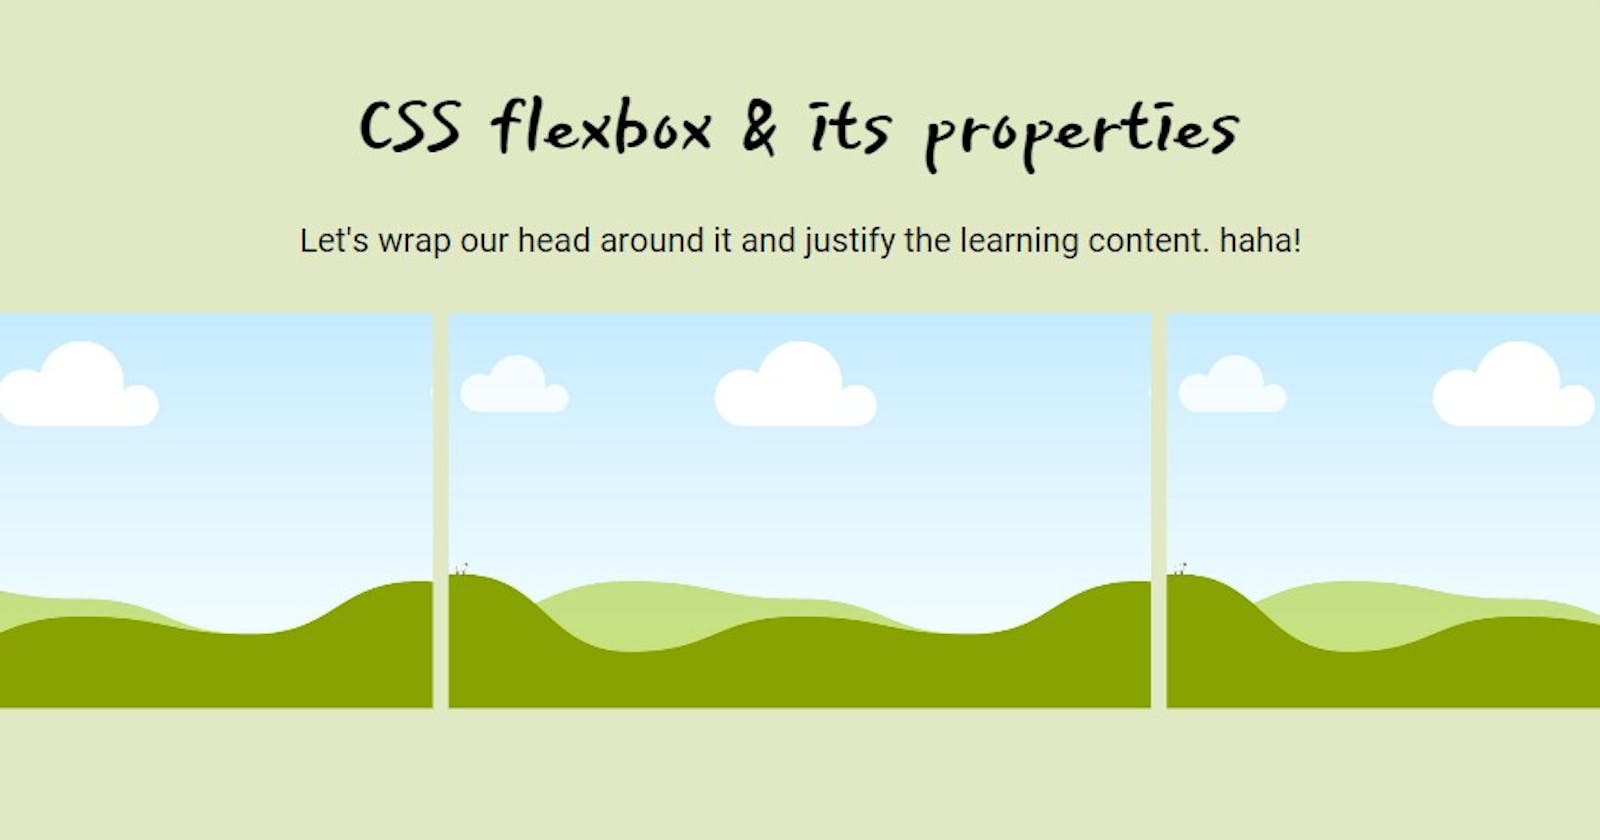 Understanding CSS flexbox